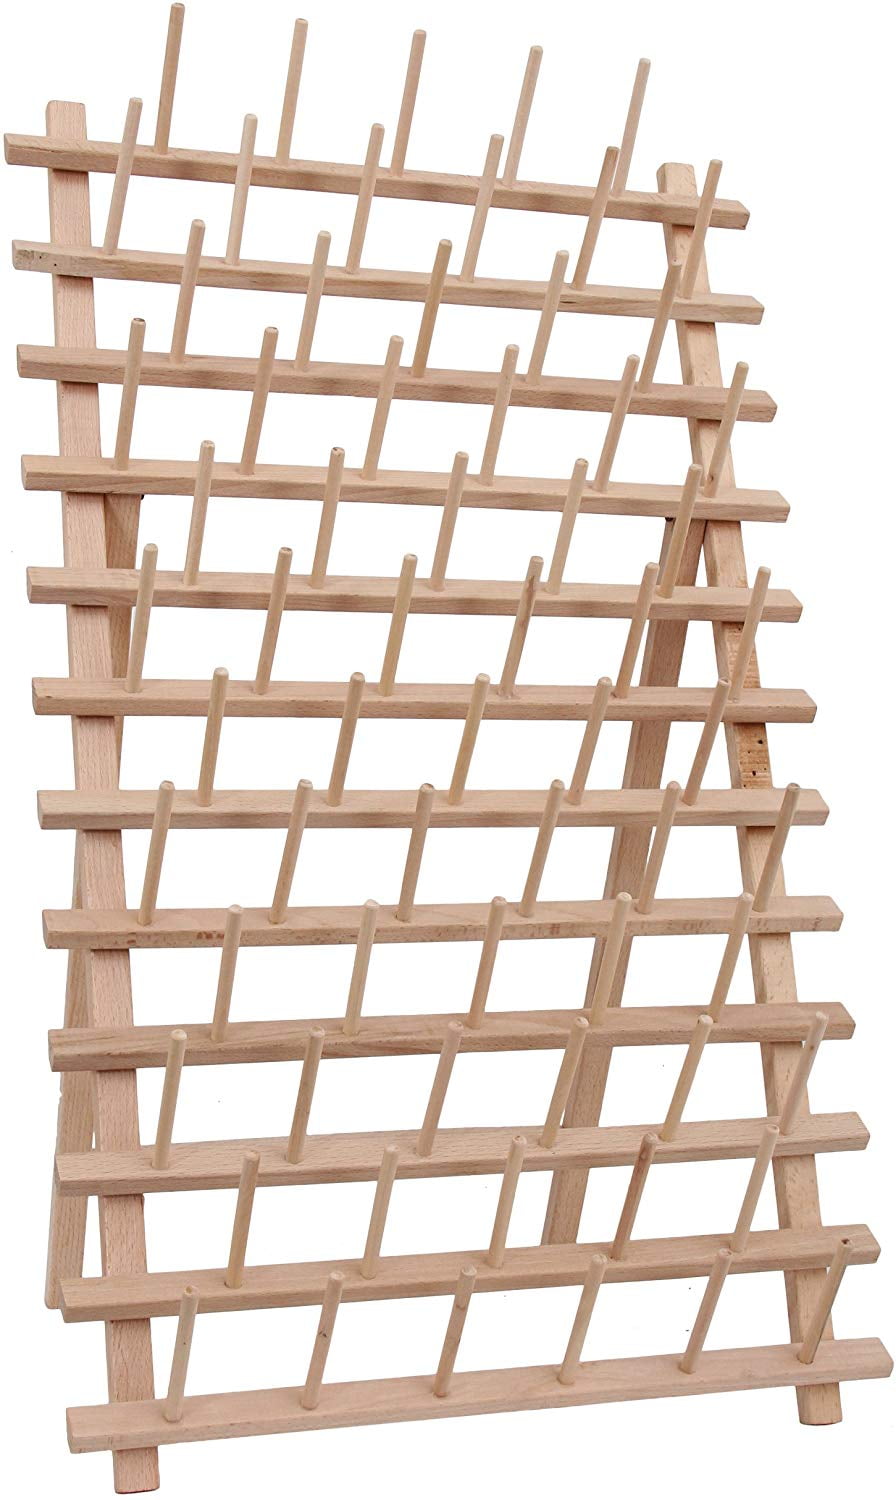 120 Spool/Cone Wood Thread Rack by Threadart 3 Sizes Available 